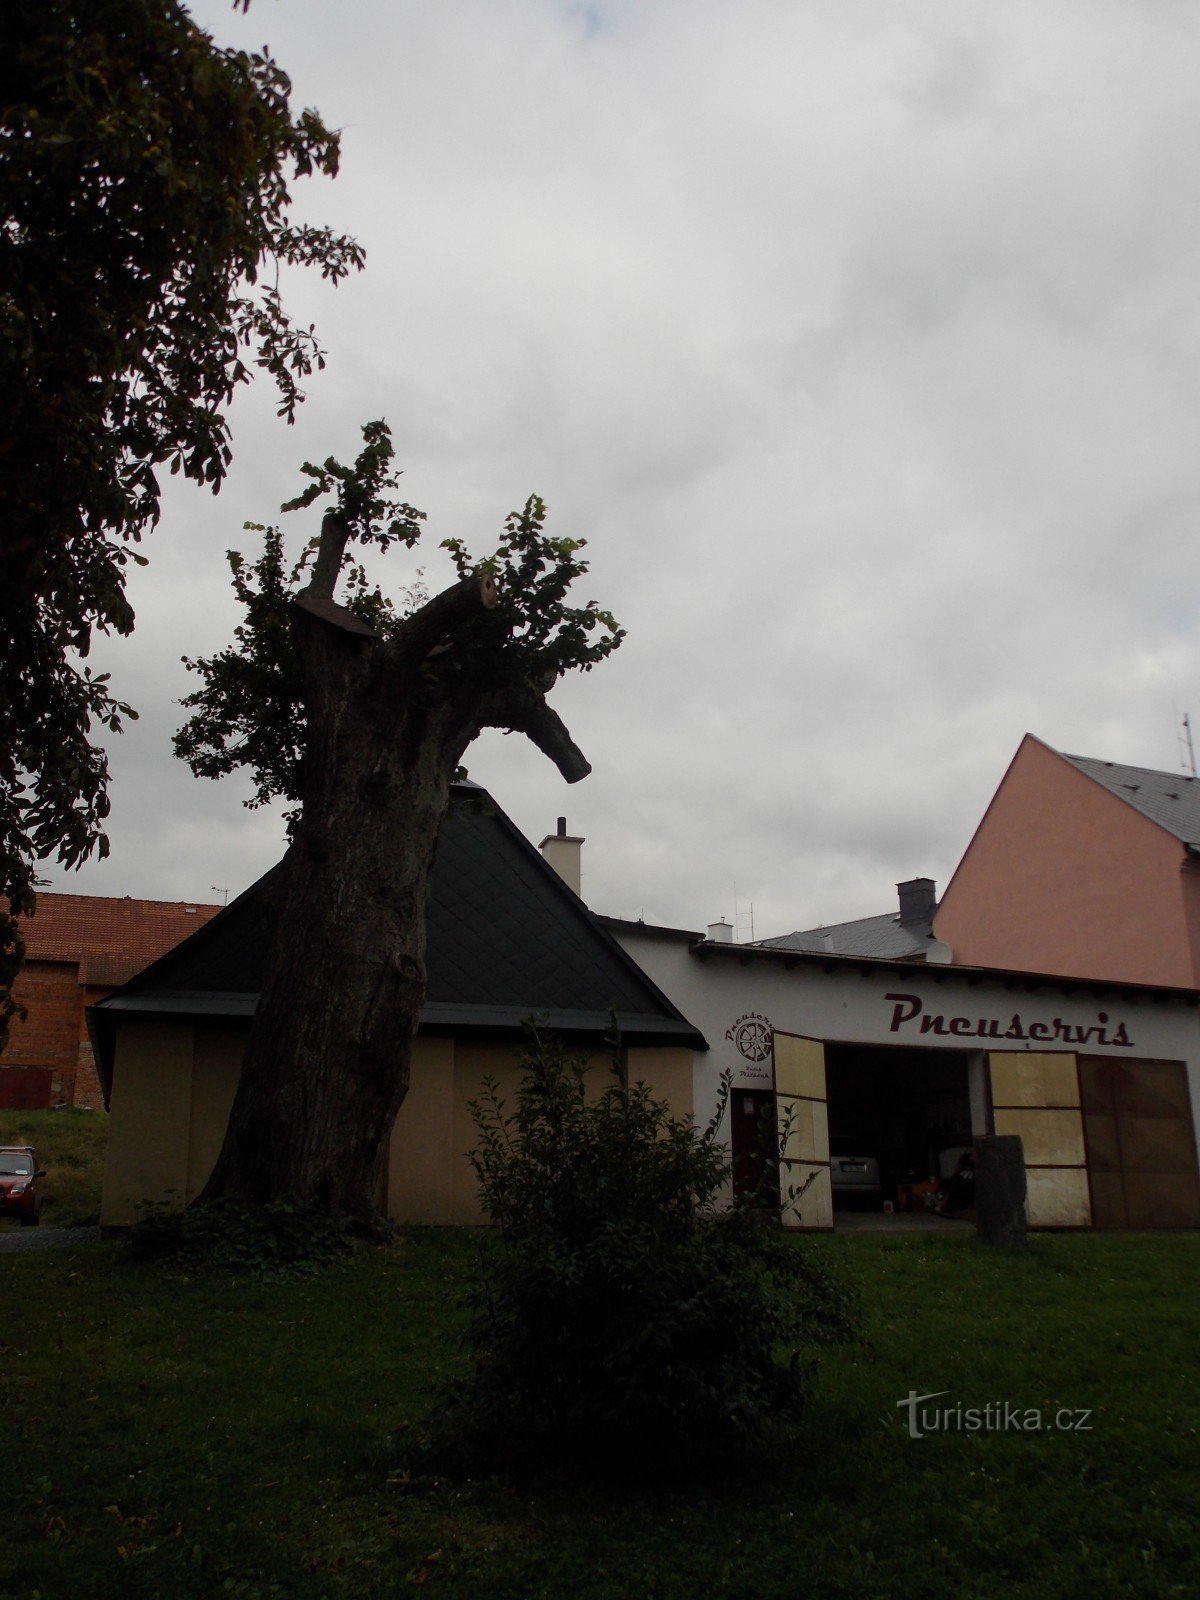 Linden of JA Komenský, a memorial tree in Rýmařov